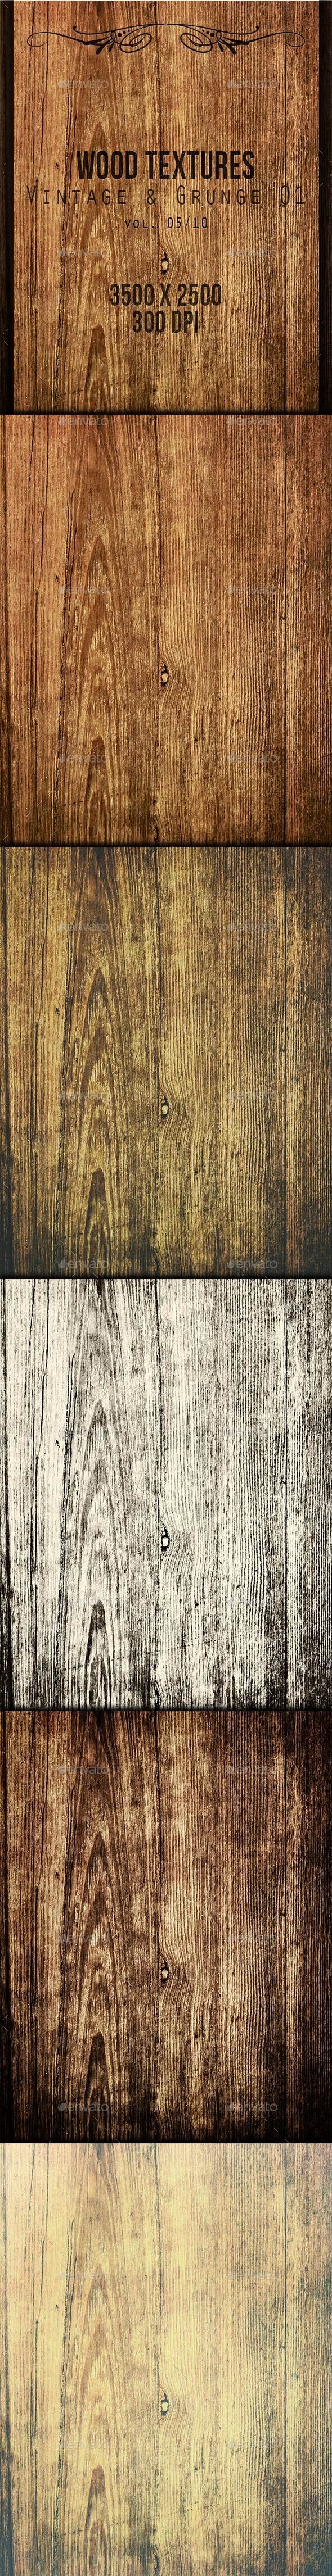 Wood textures vintage grunge01 vol.05 preview